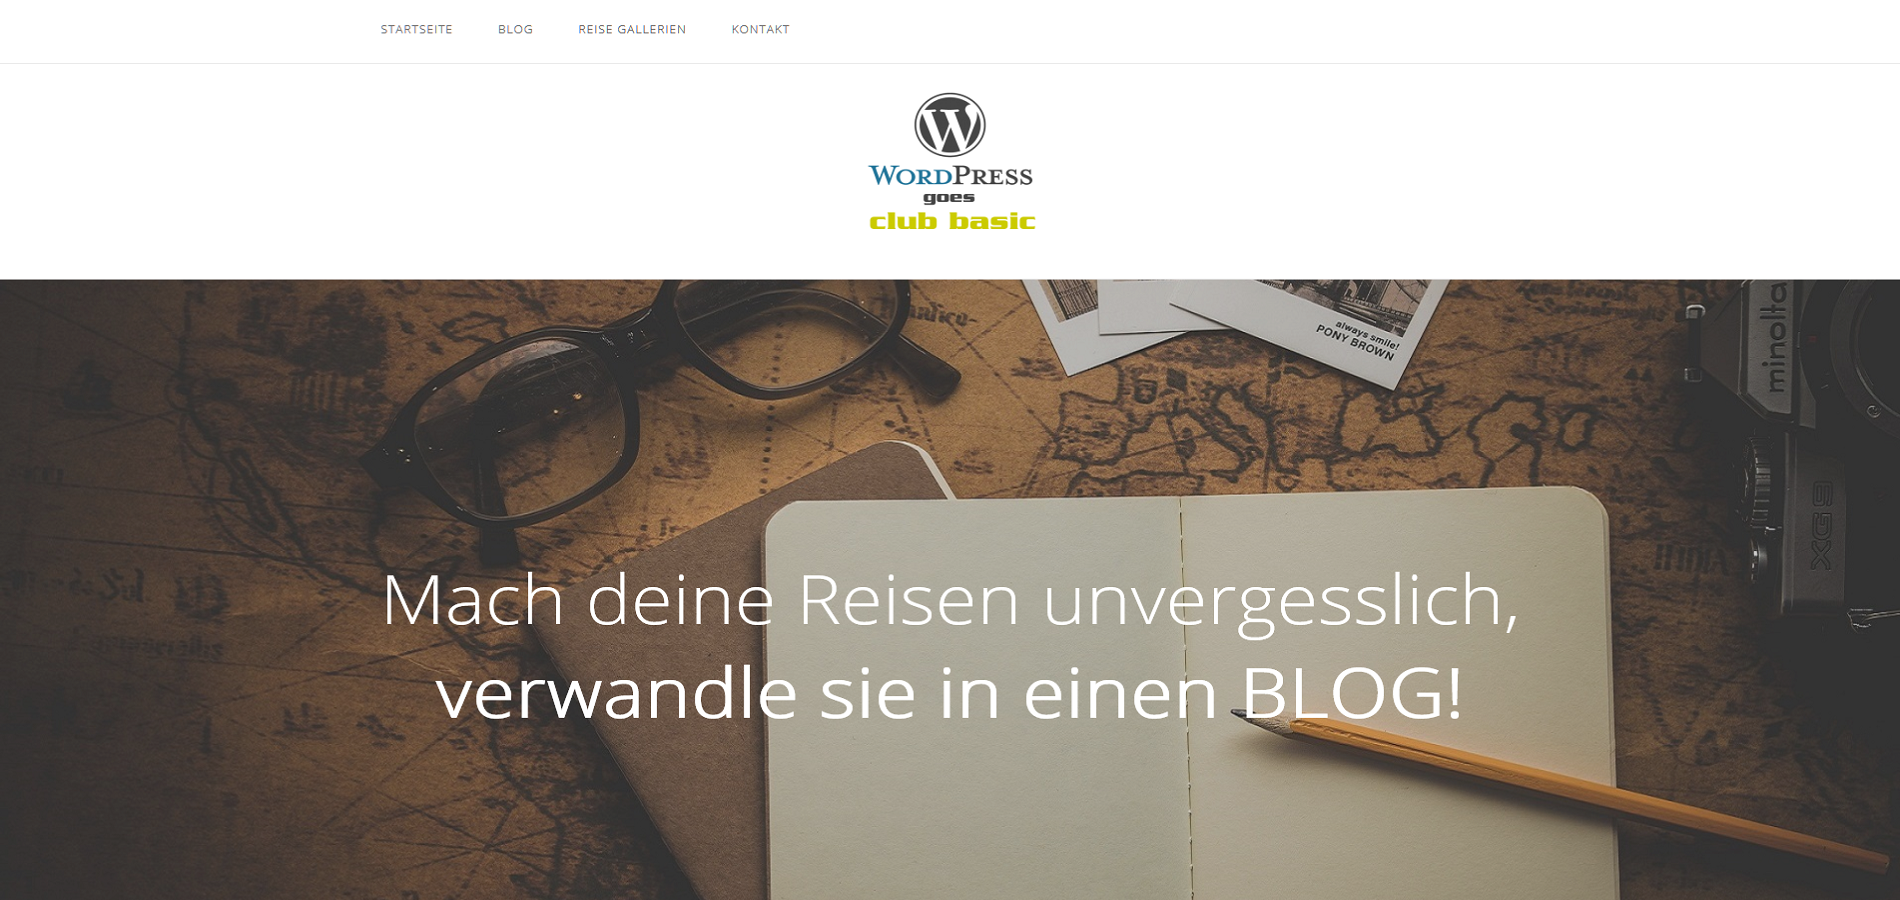 Wordpress Blog Wordpress goes club basic